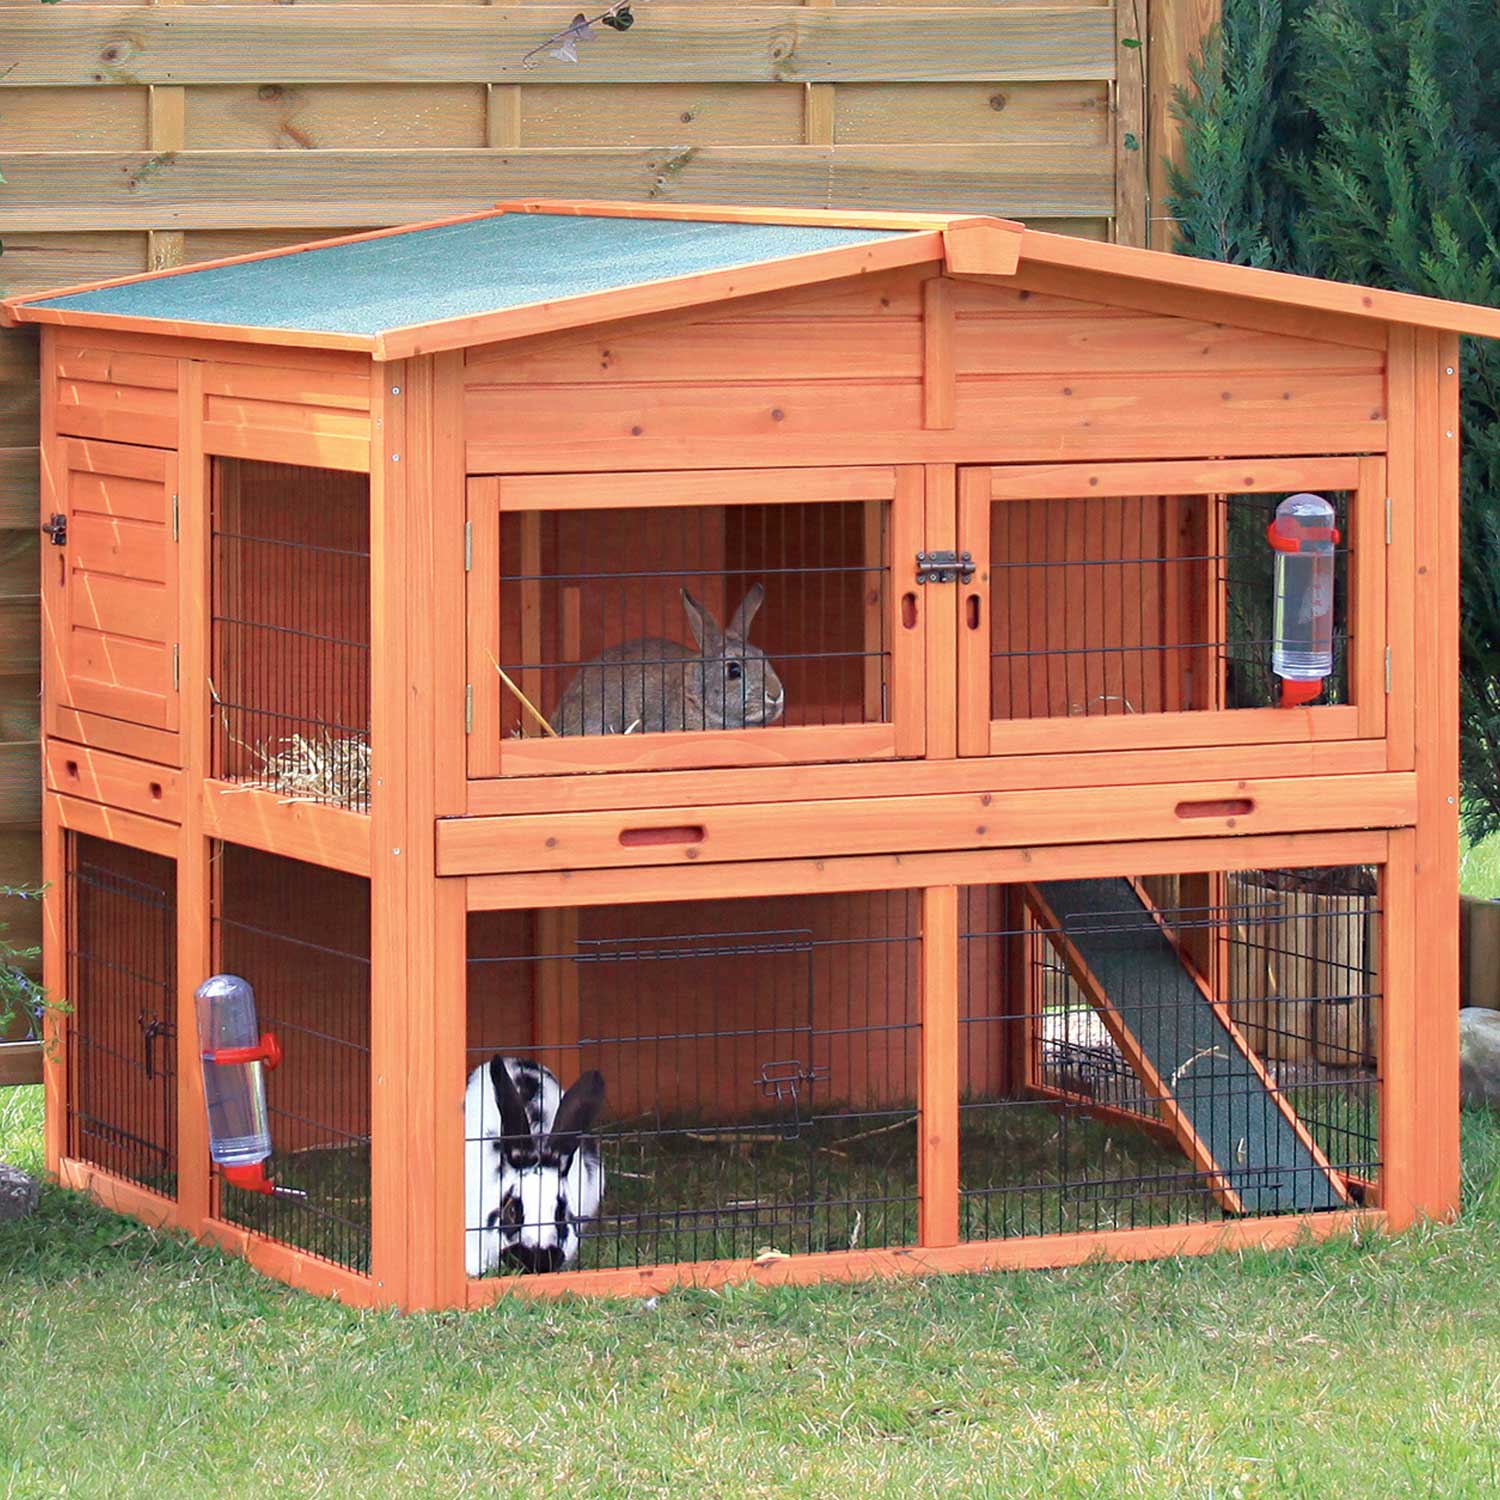 outdoor rabbit cage